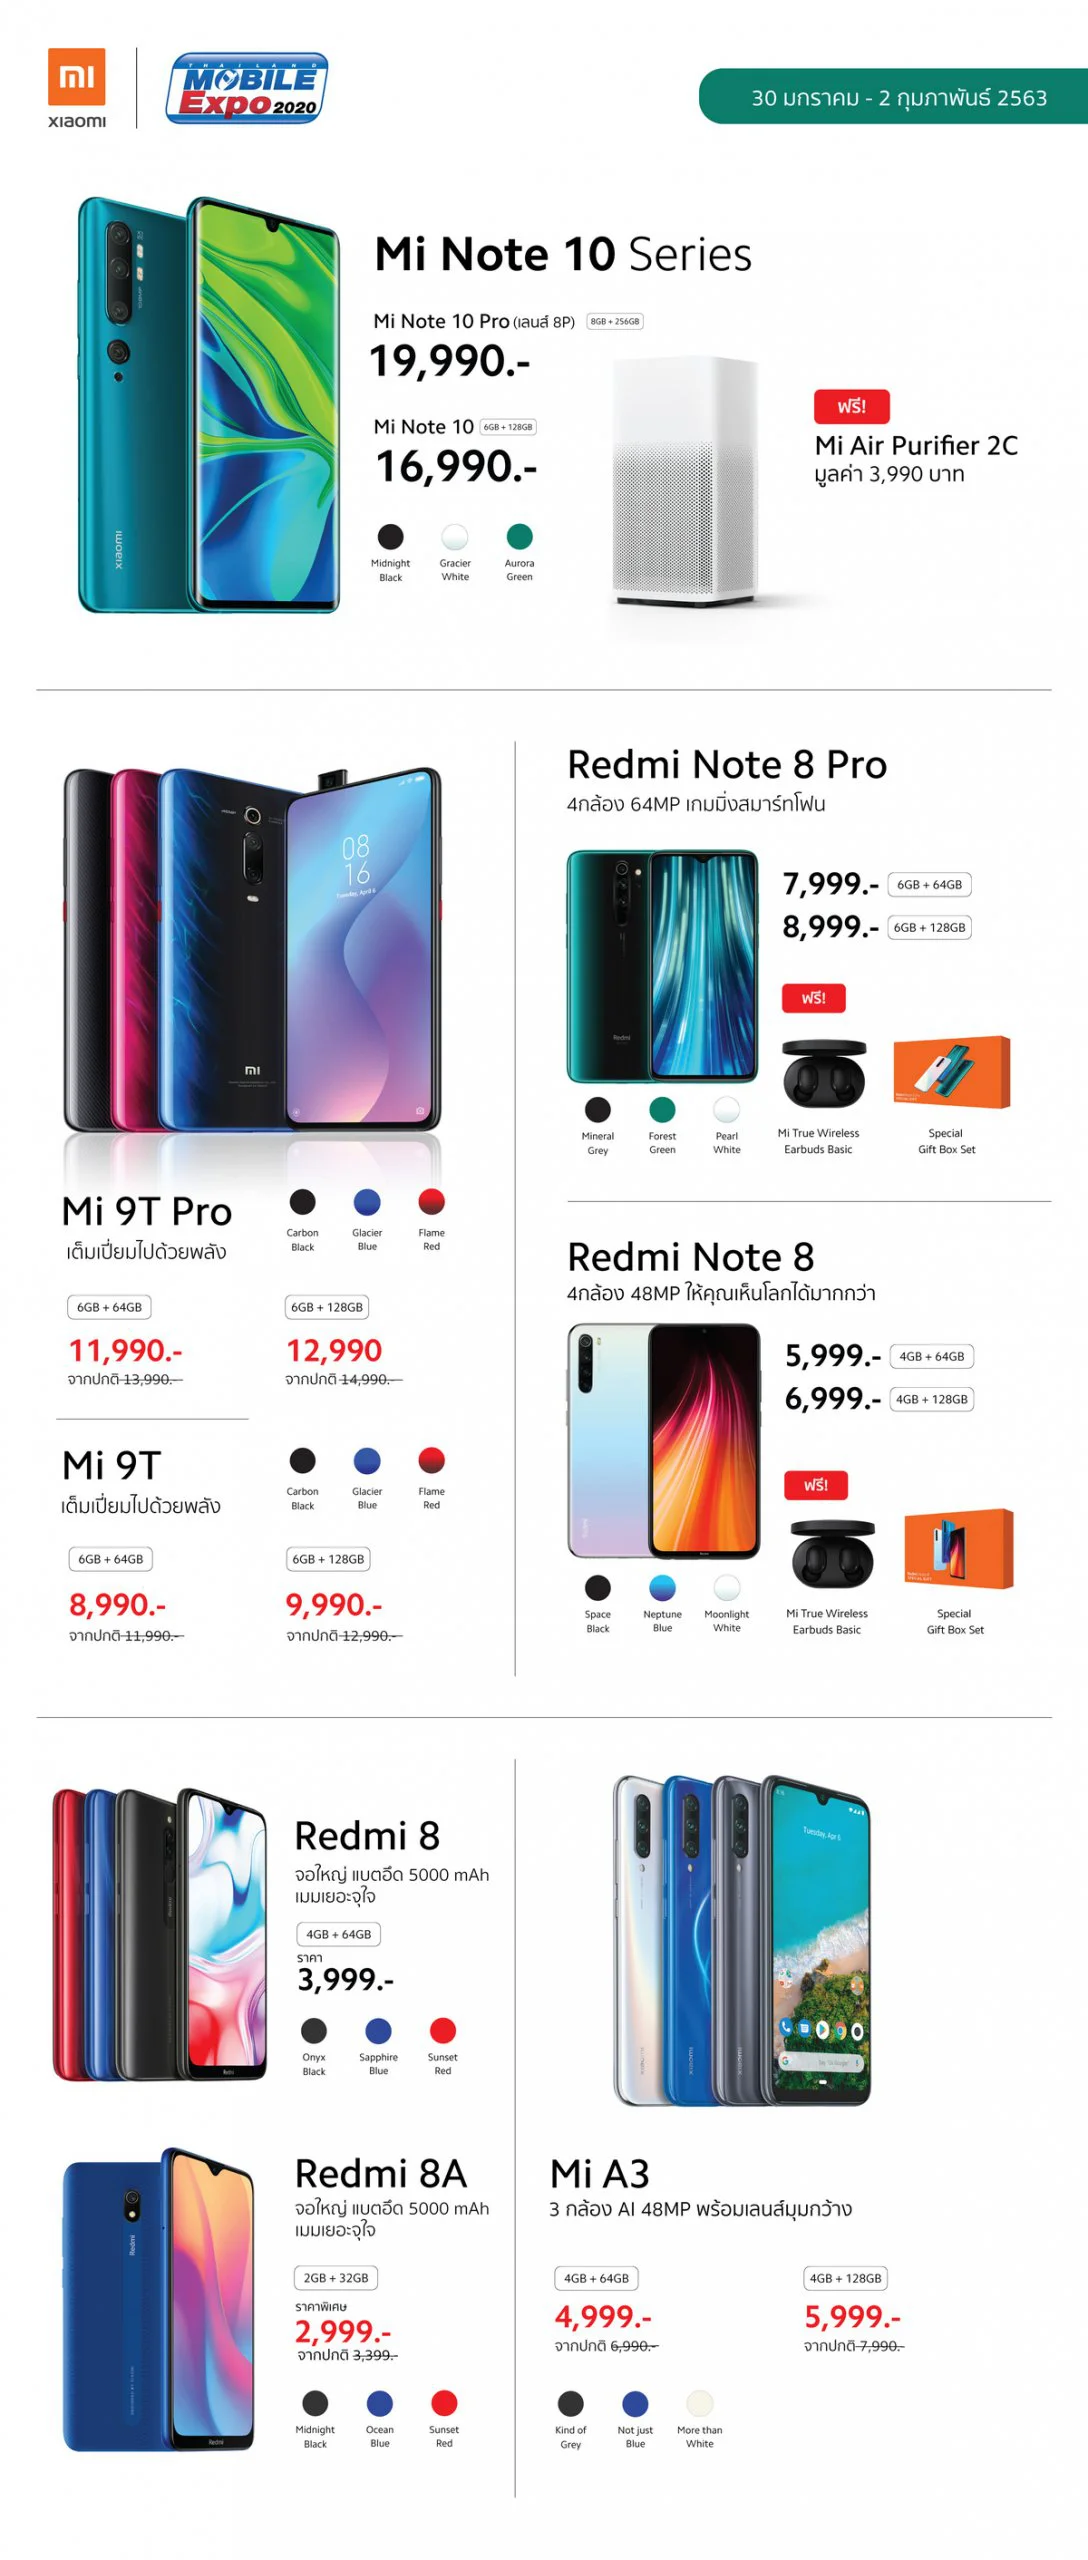 tme2020 promo resize scaled | mobile expo | โปรแรง! Xiaomi เข้าร่วมงาน Thailand Mobile Expo 2020 ขนสมาร์ทโฟนรุ่นเด็ดๆ พร้อมโปรโมชั่นสุดแรงมามอบเป็นพิเศษ